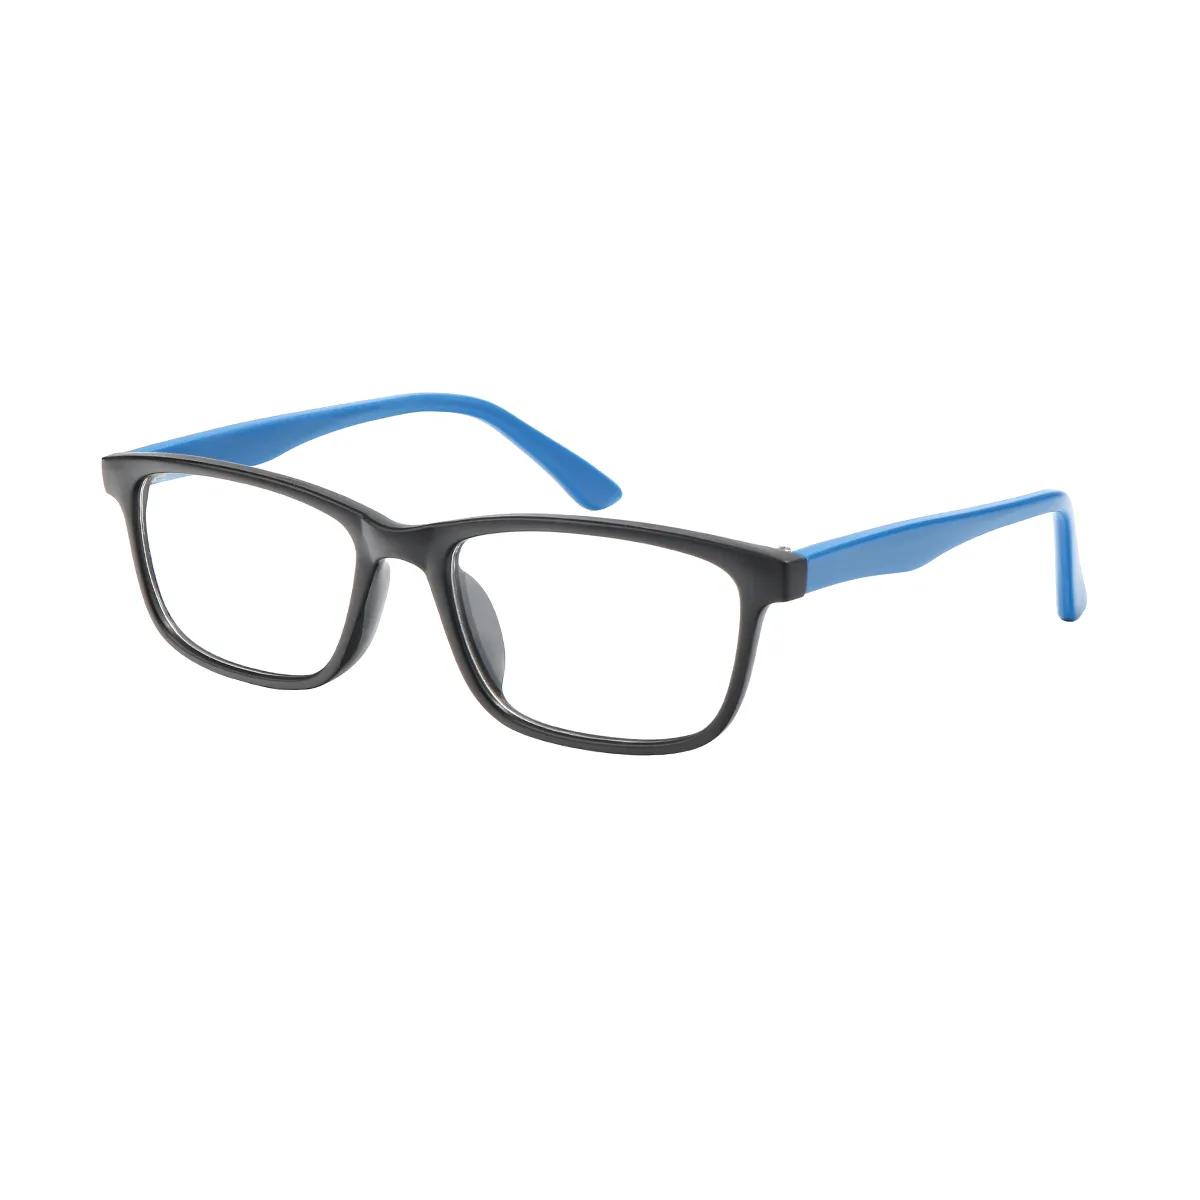 Aggy - Rectangle Black-Blue Glasses for Women